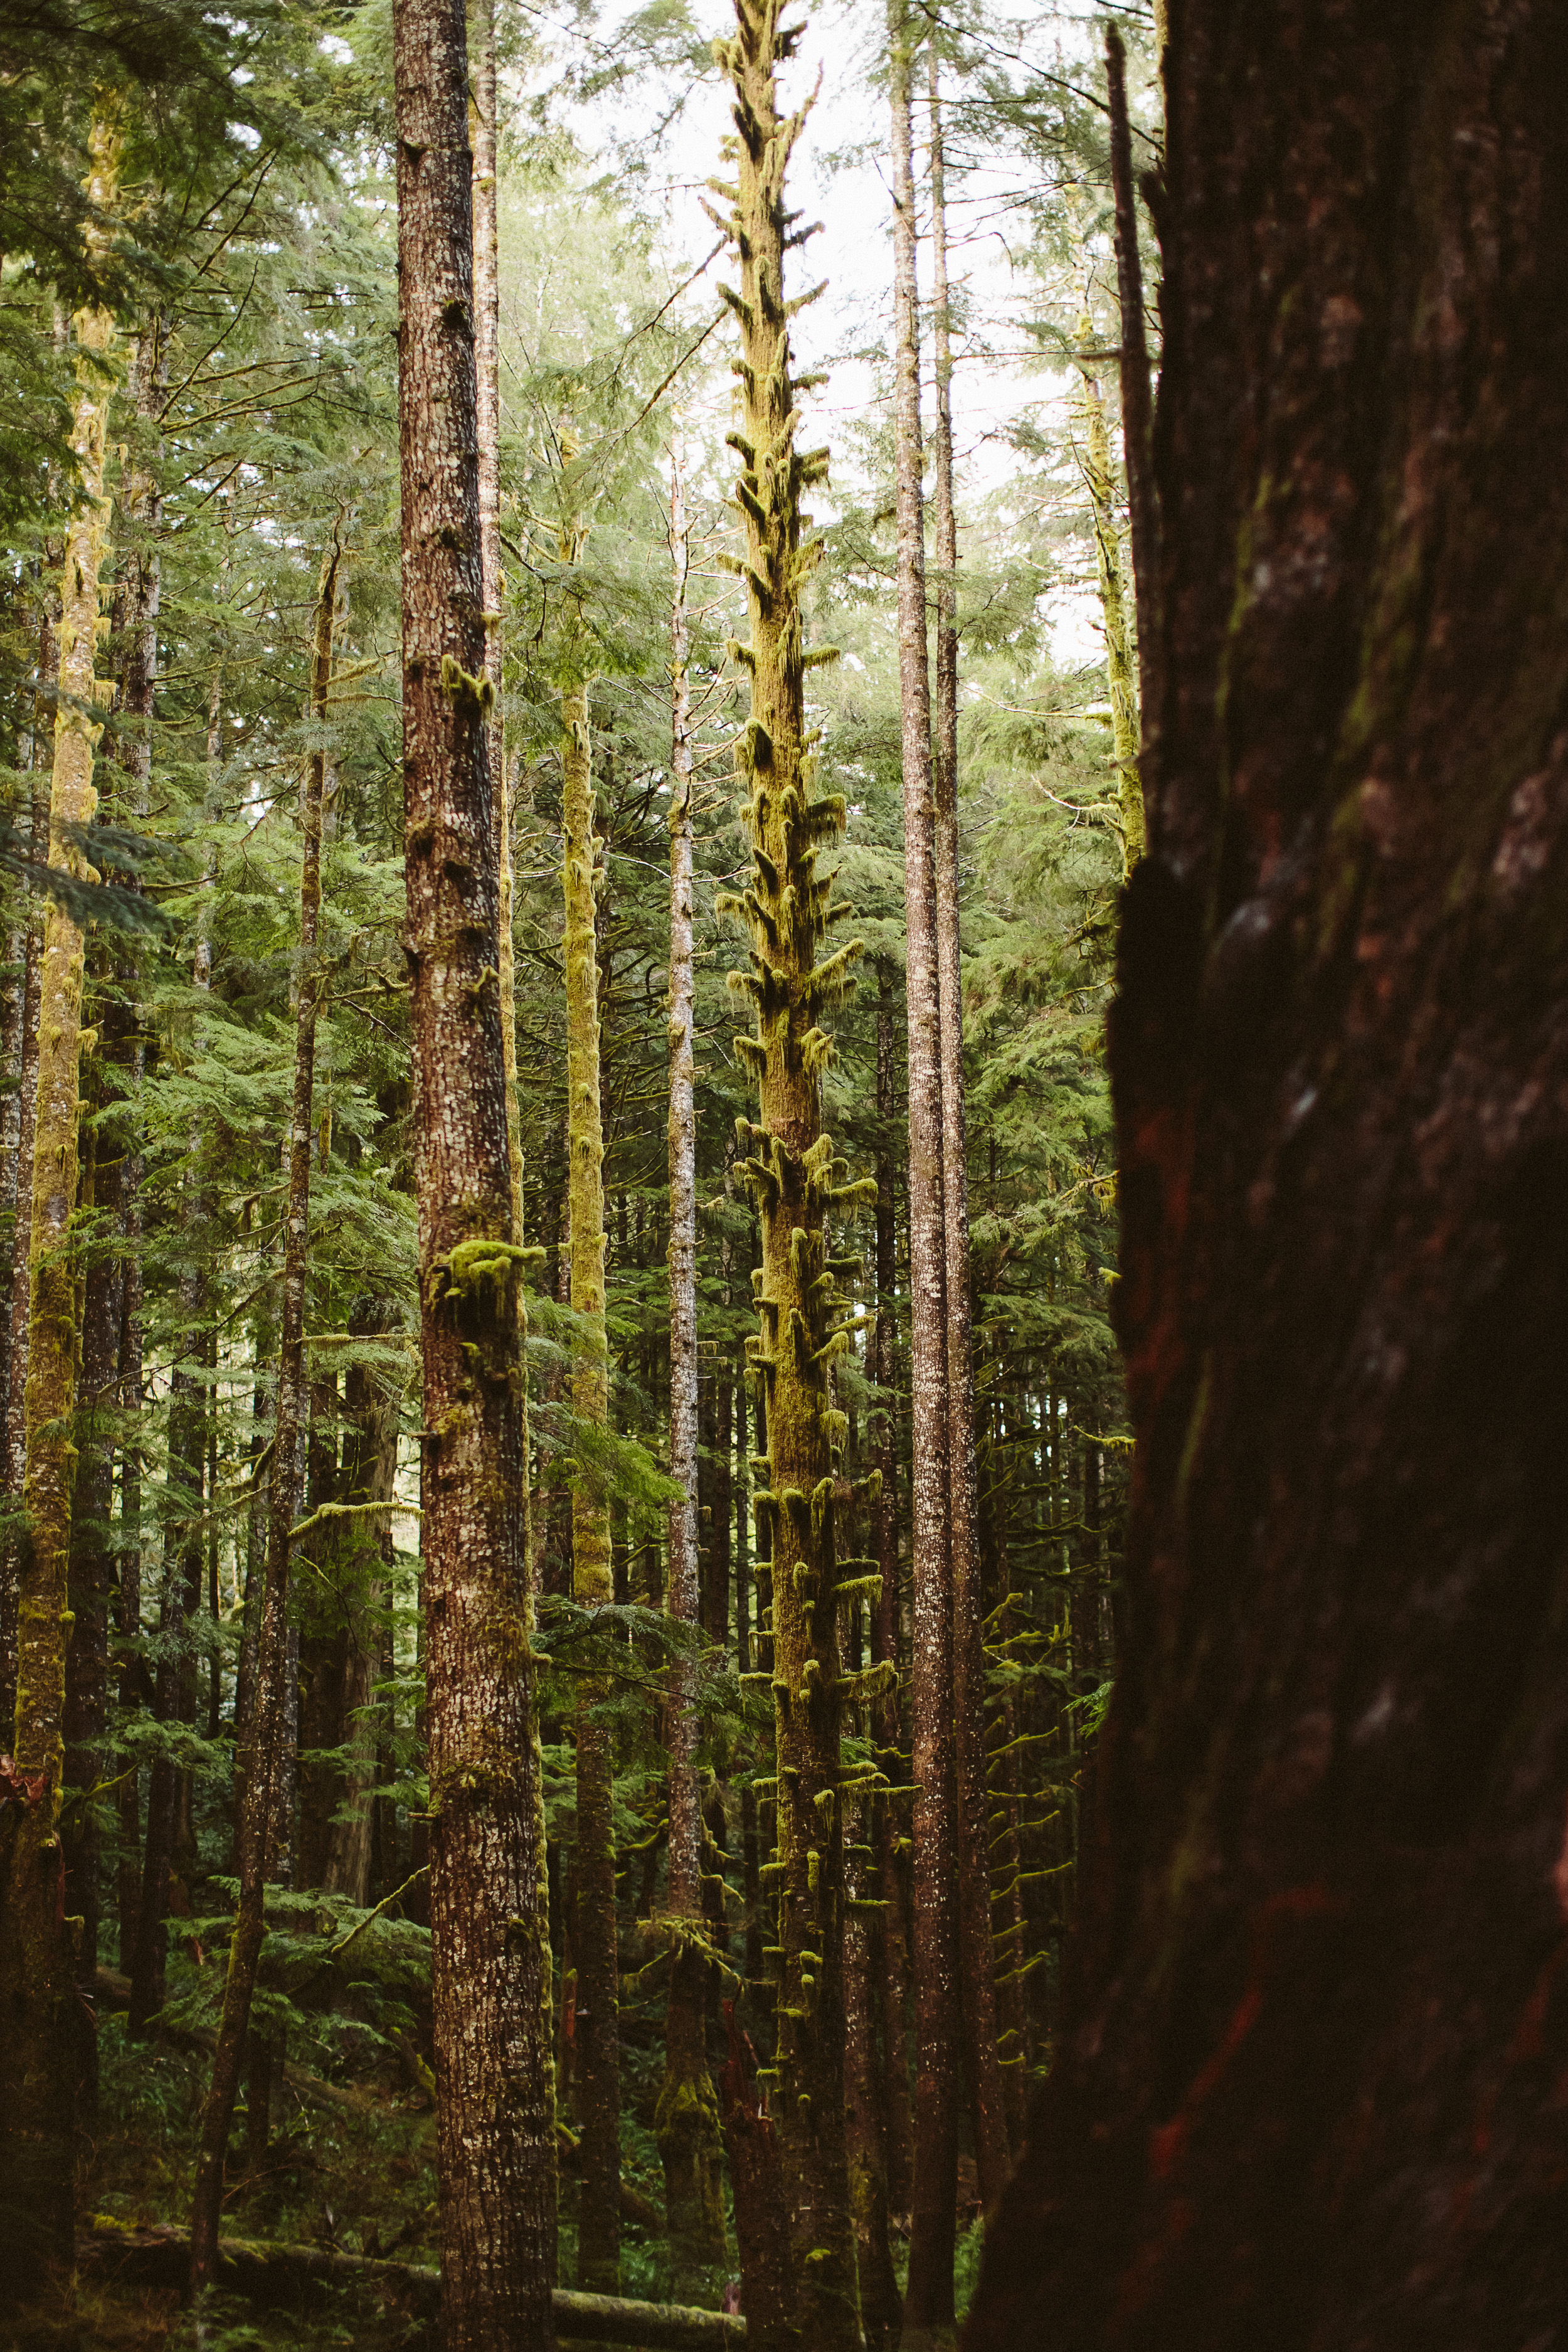 005-Vancouver-Island-Old-Growth-Forests-Logging-Port-Renfrew-Avatar-Grove.jpg